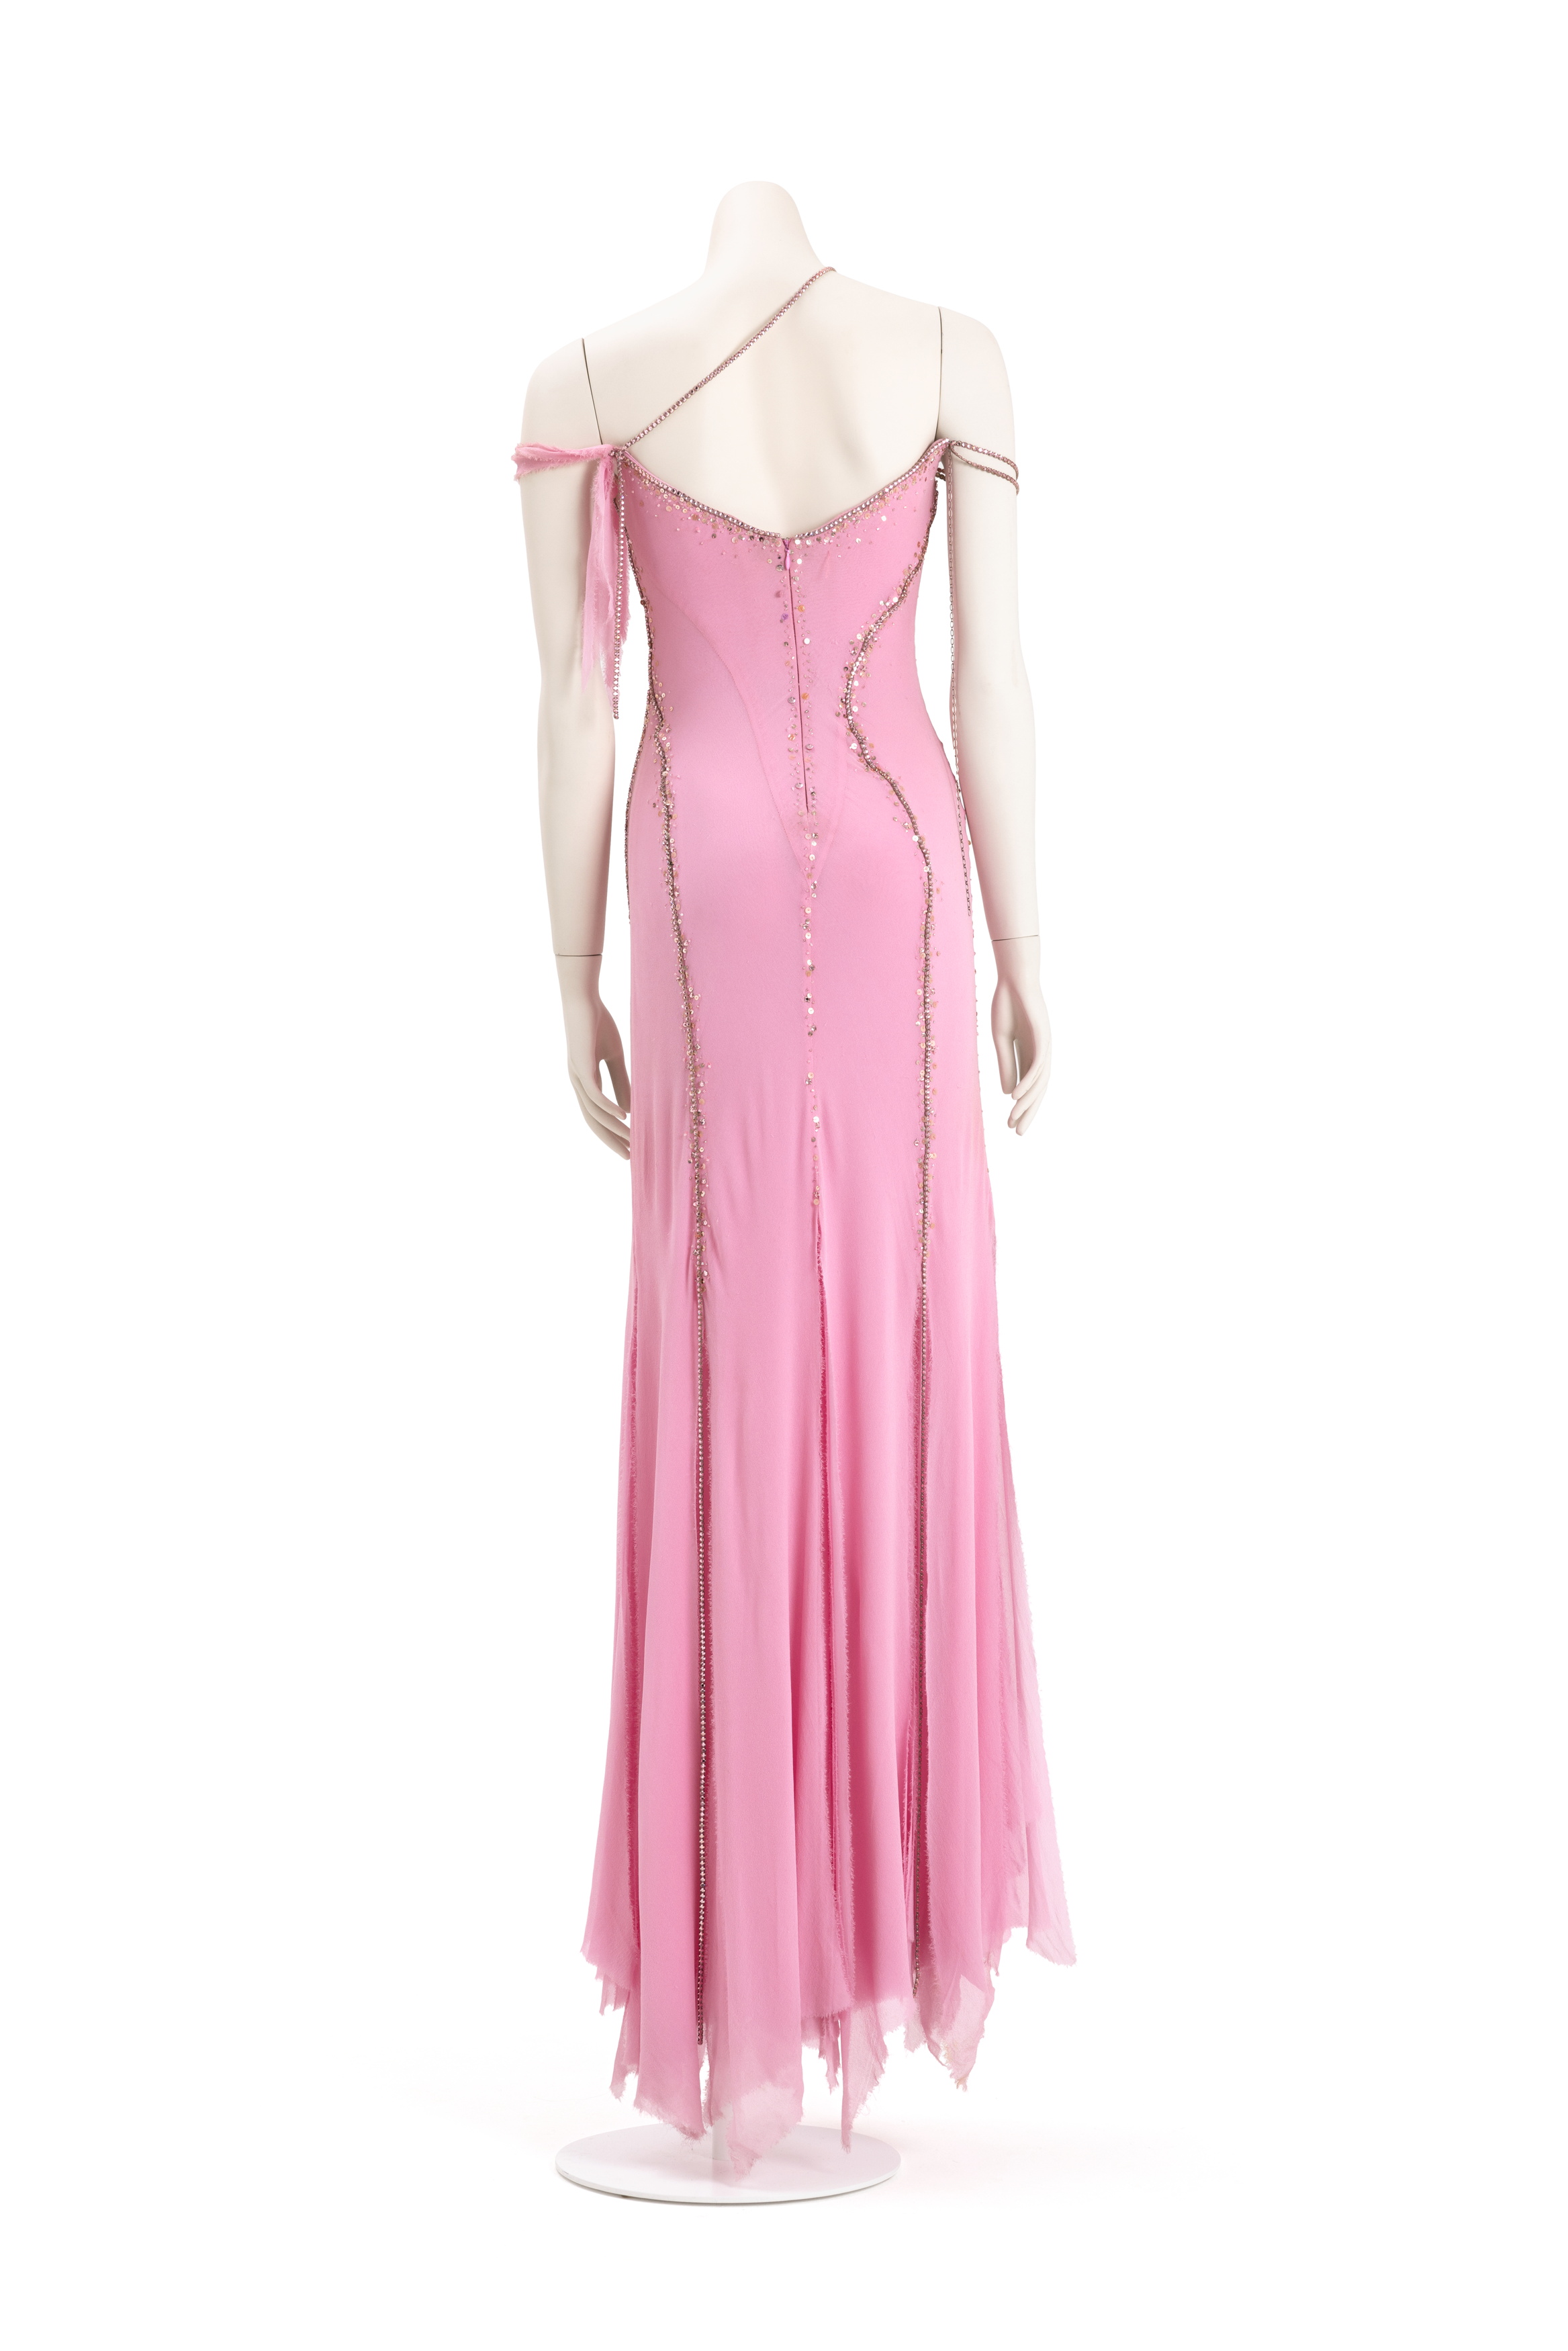 Evening dress designed by Lisa Ho and worn by Delta Goodrem